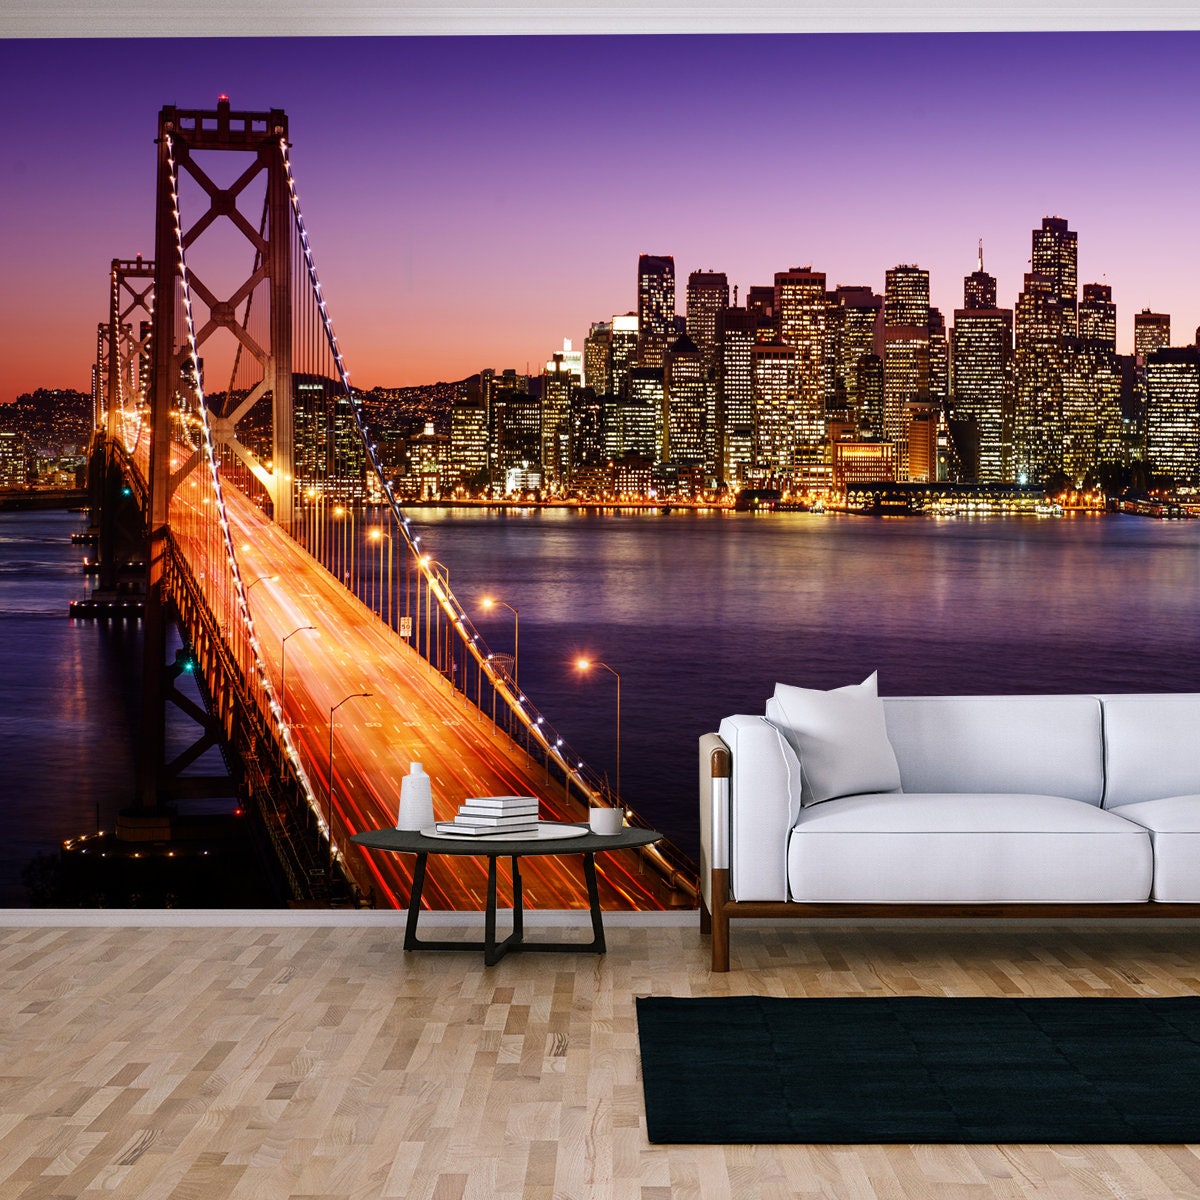 San Francisco Skyline and Bay Bridge at Sunset, California Wallpaper Living Room Mural